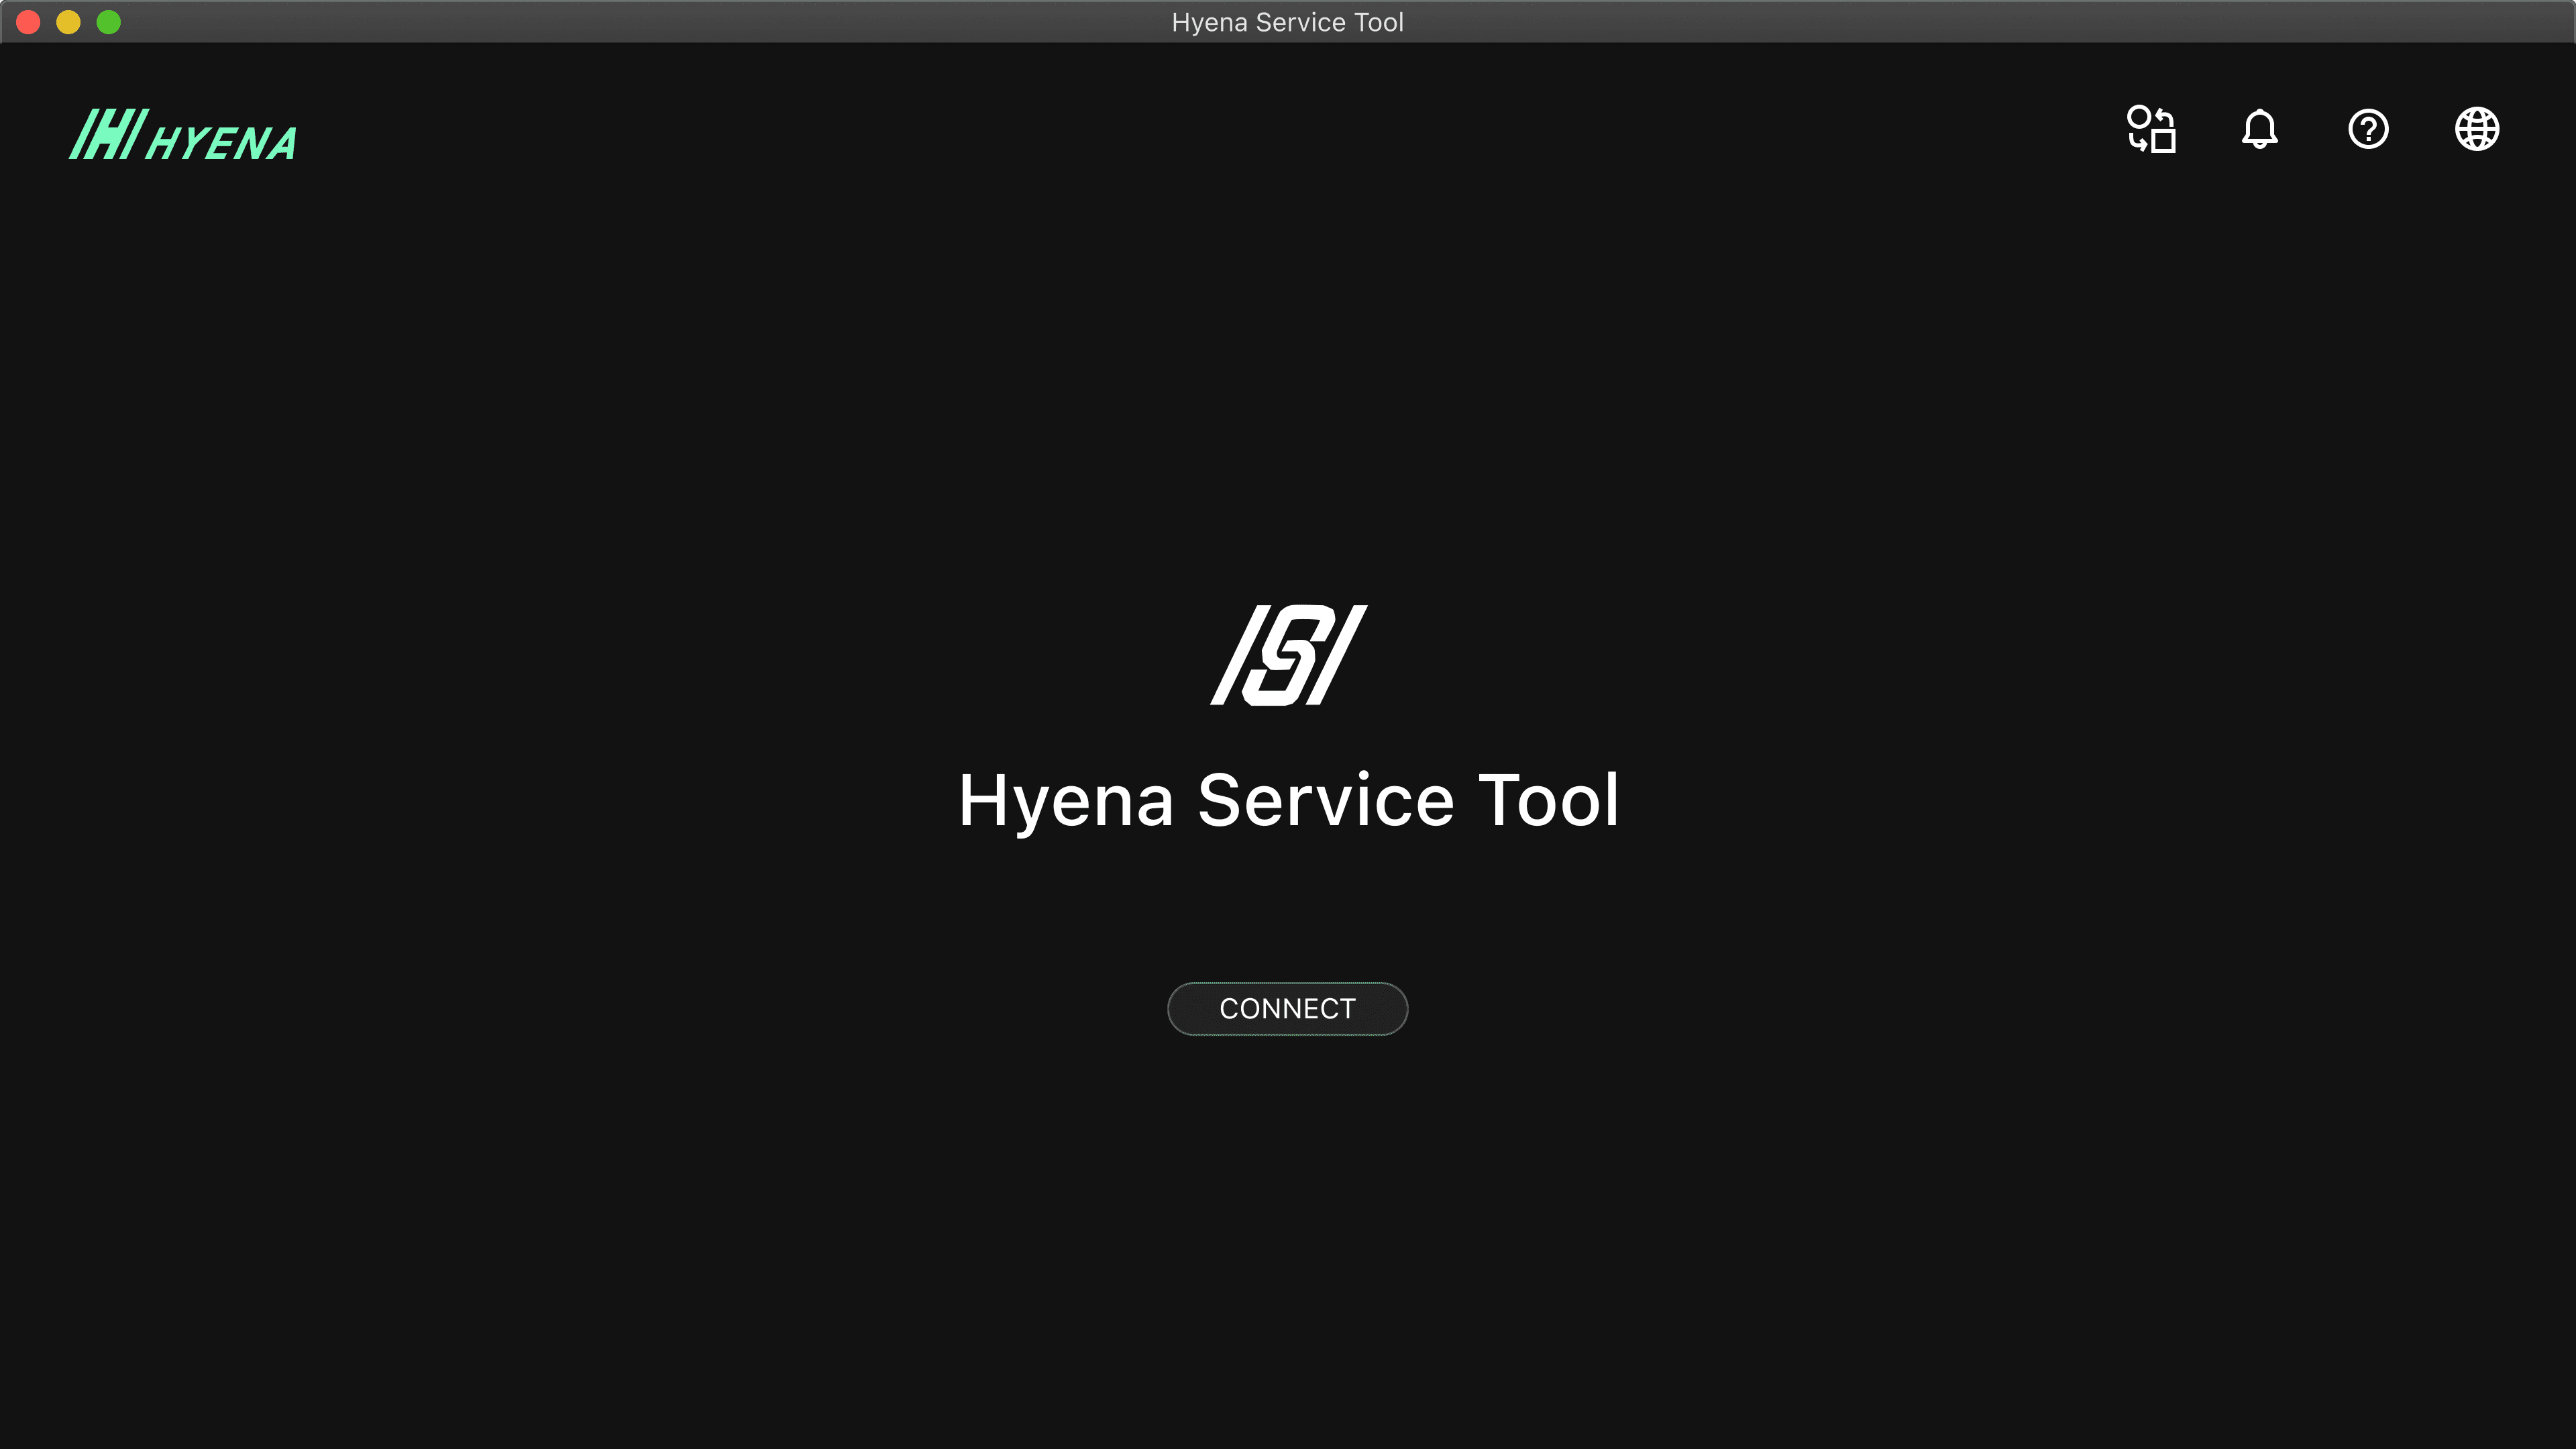 Hyena Service Tool Home Page